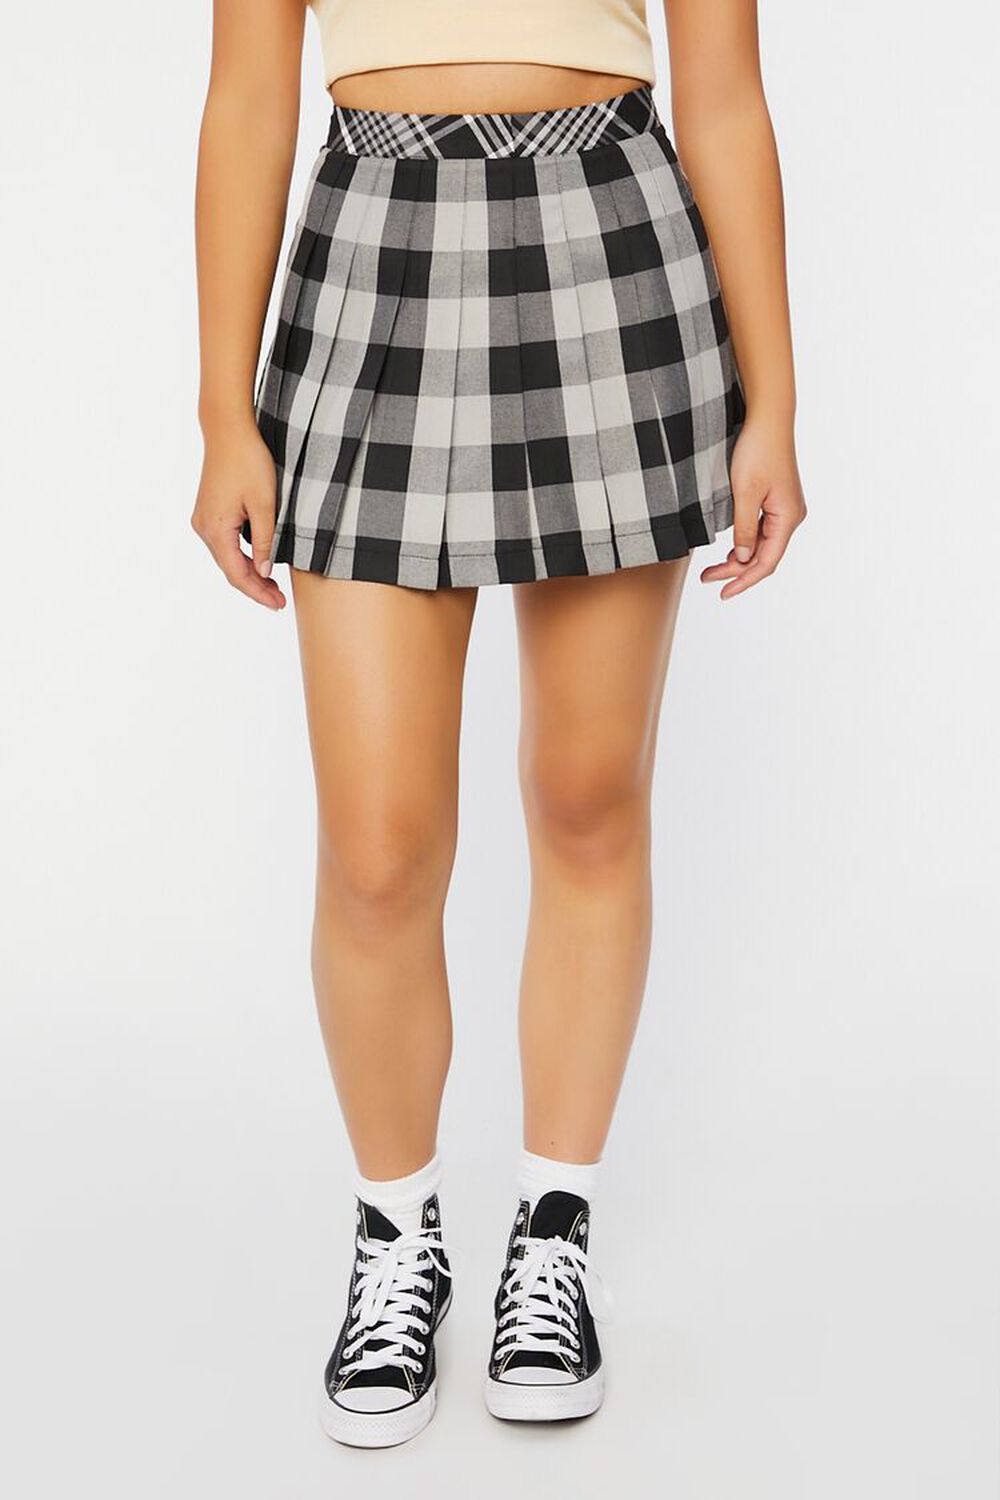 BLACK/TAUPE Plaid A-Line Mini Skirt, image 2